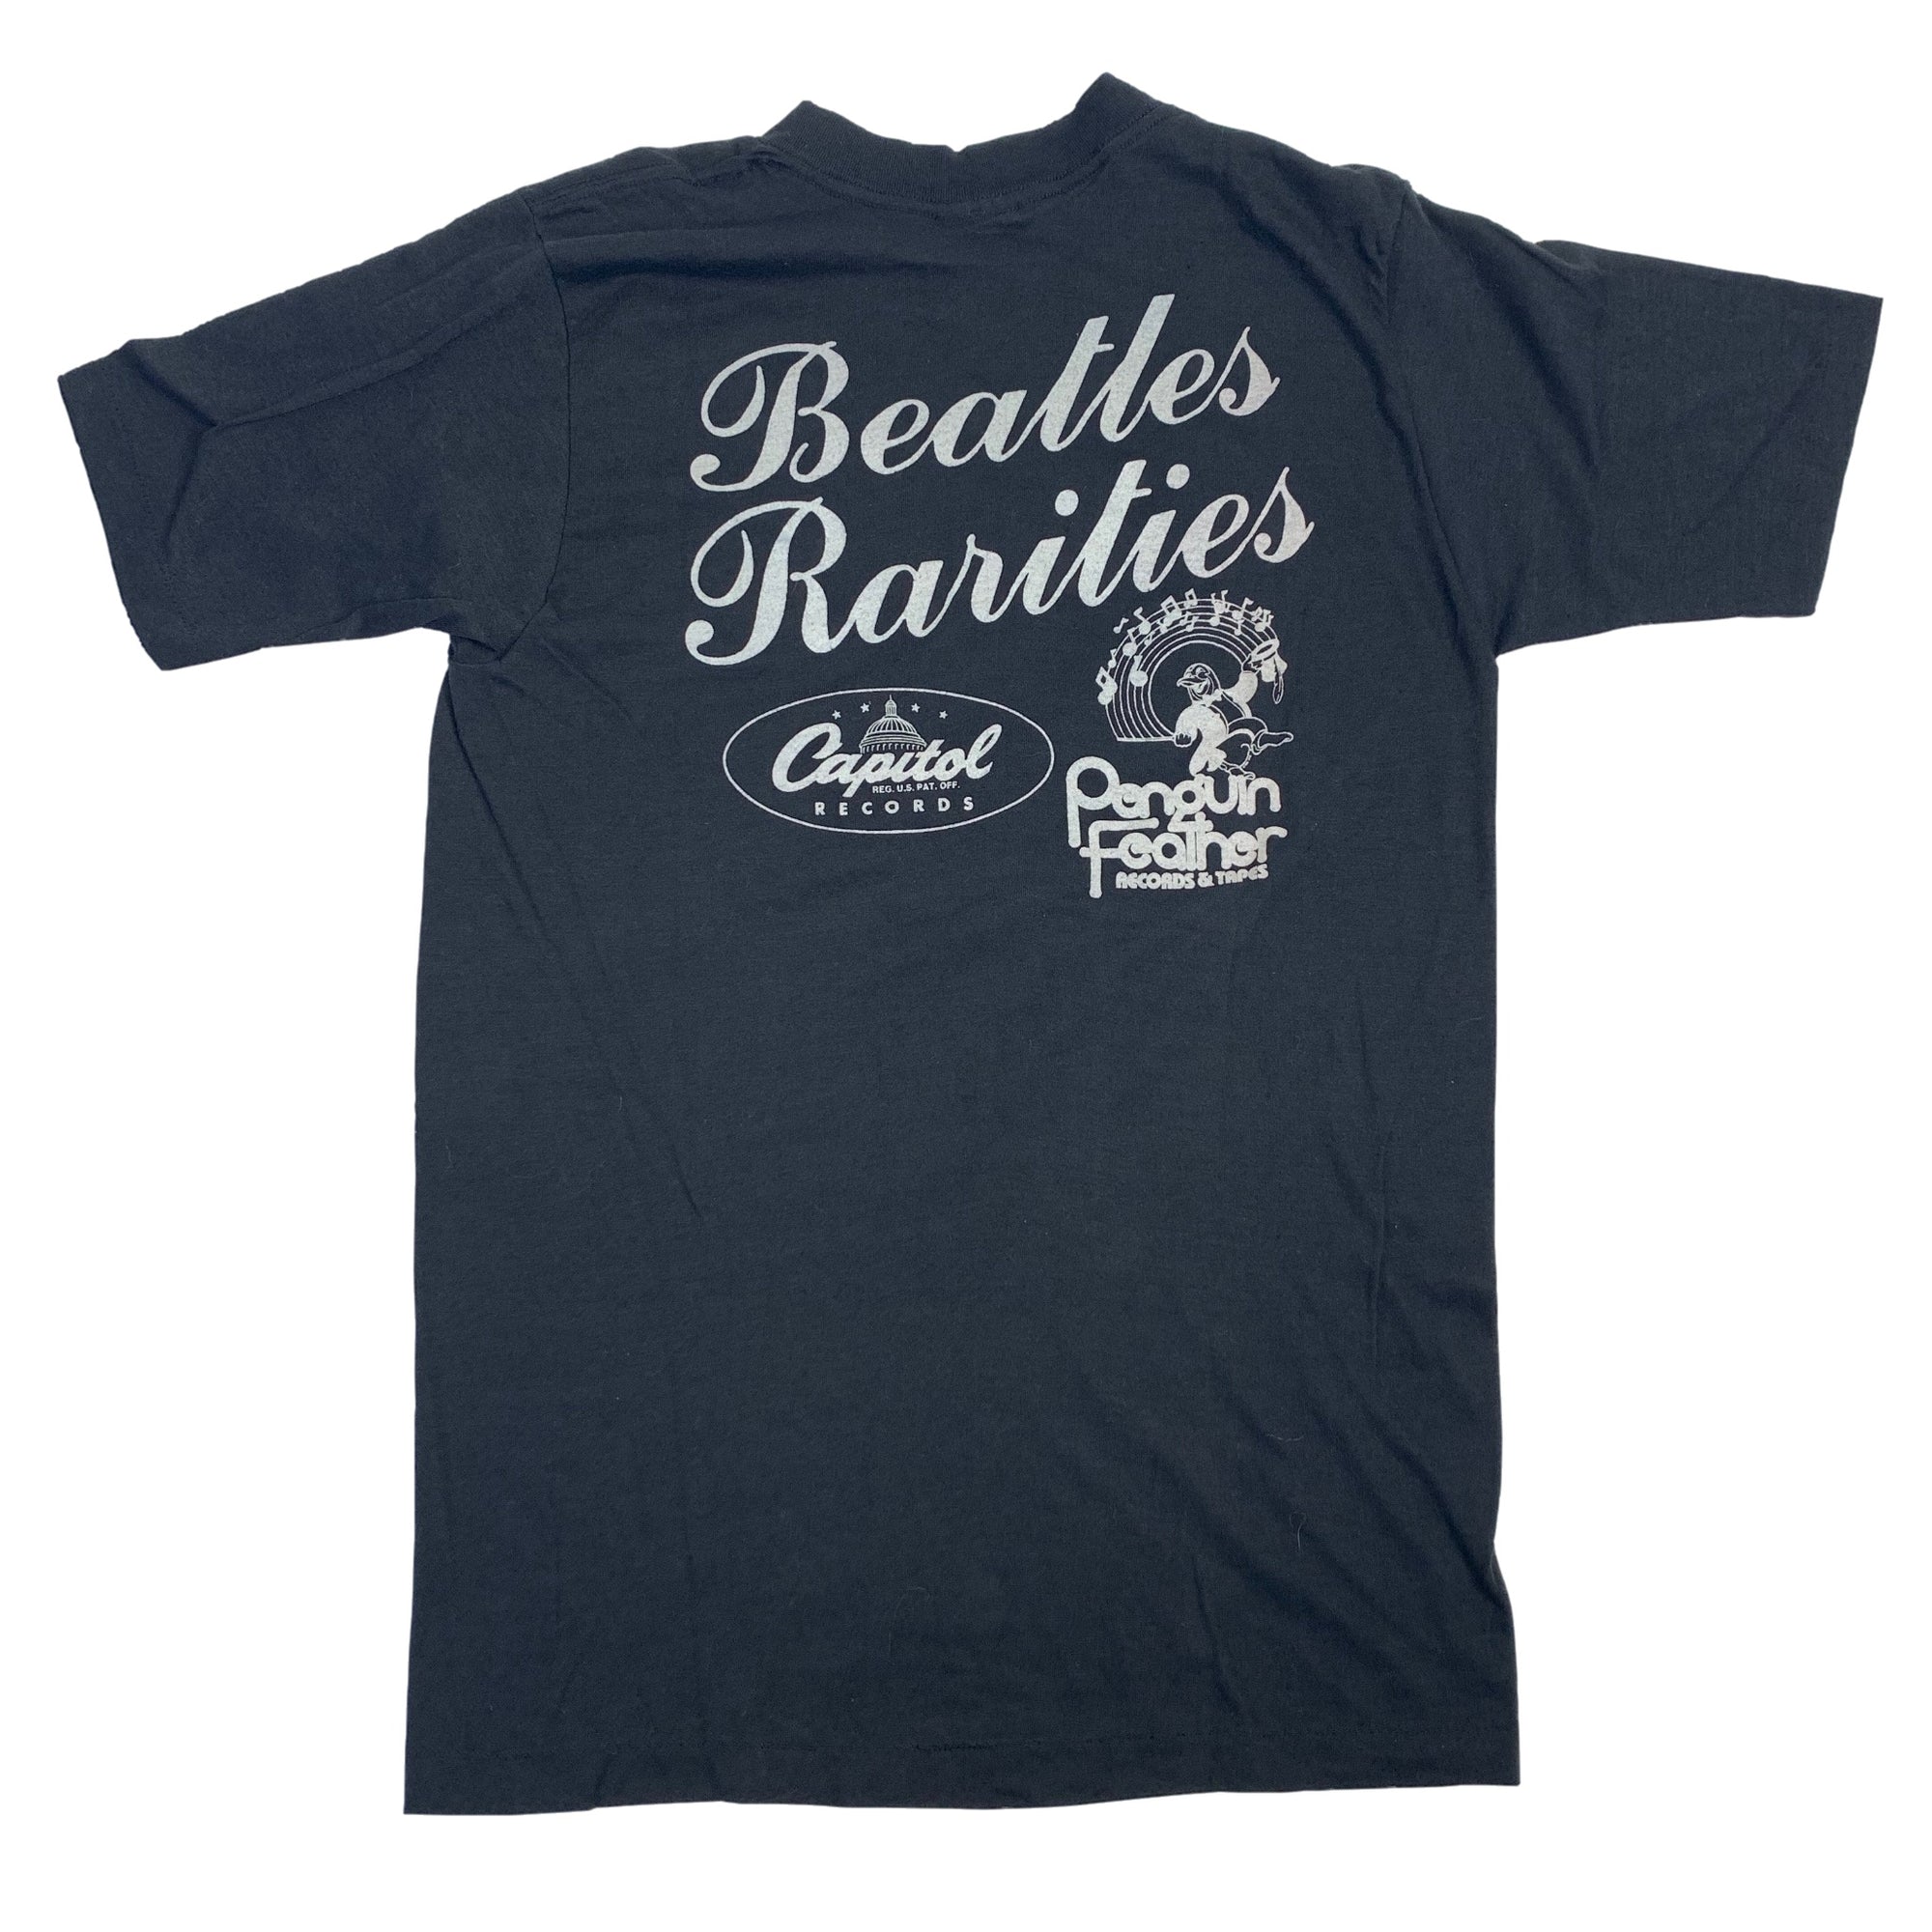 Vintage The Beatles "WAVA FM" T-Shirt - jointcustodydc